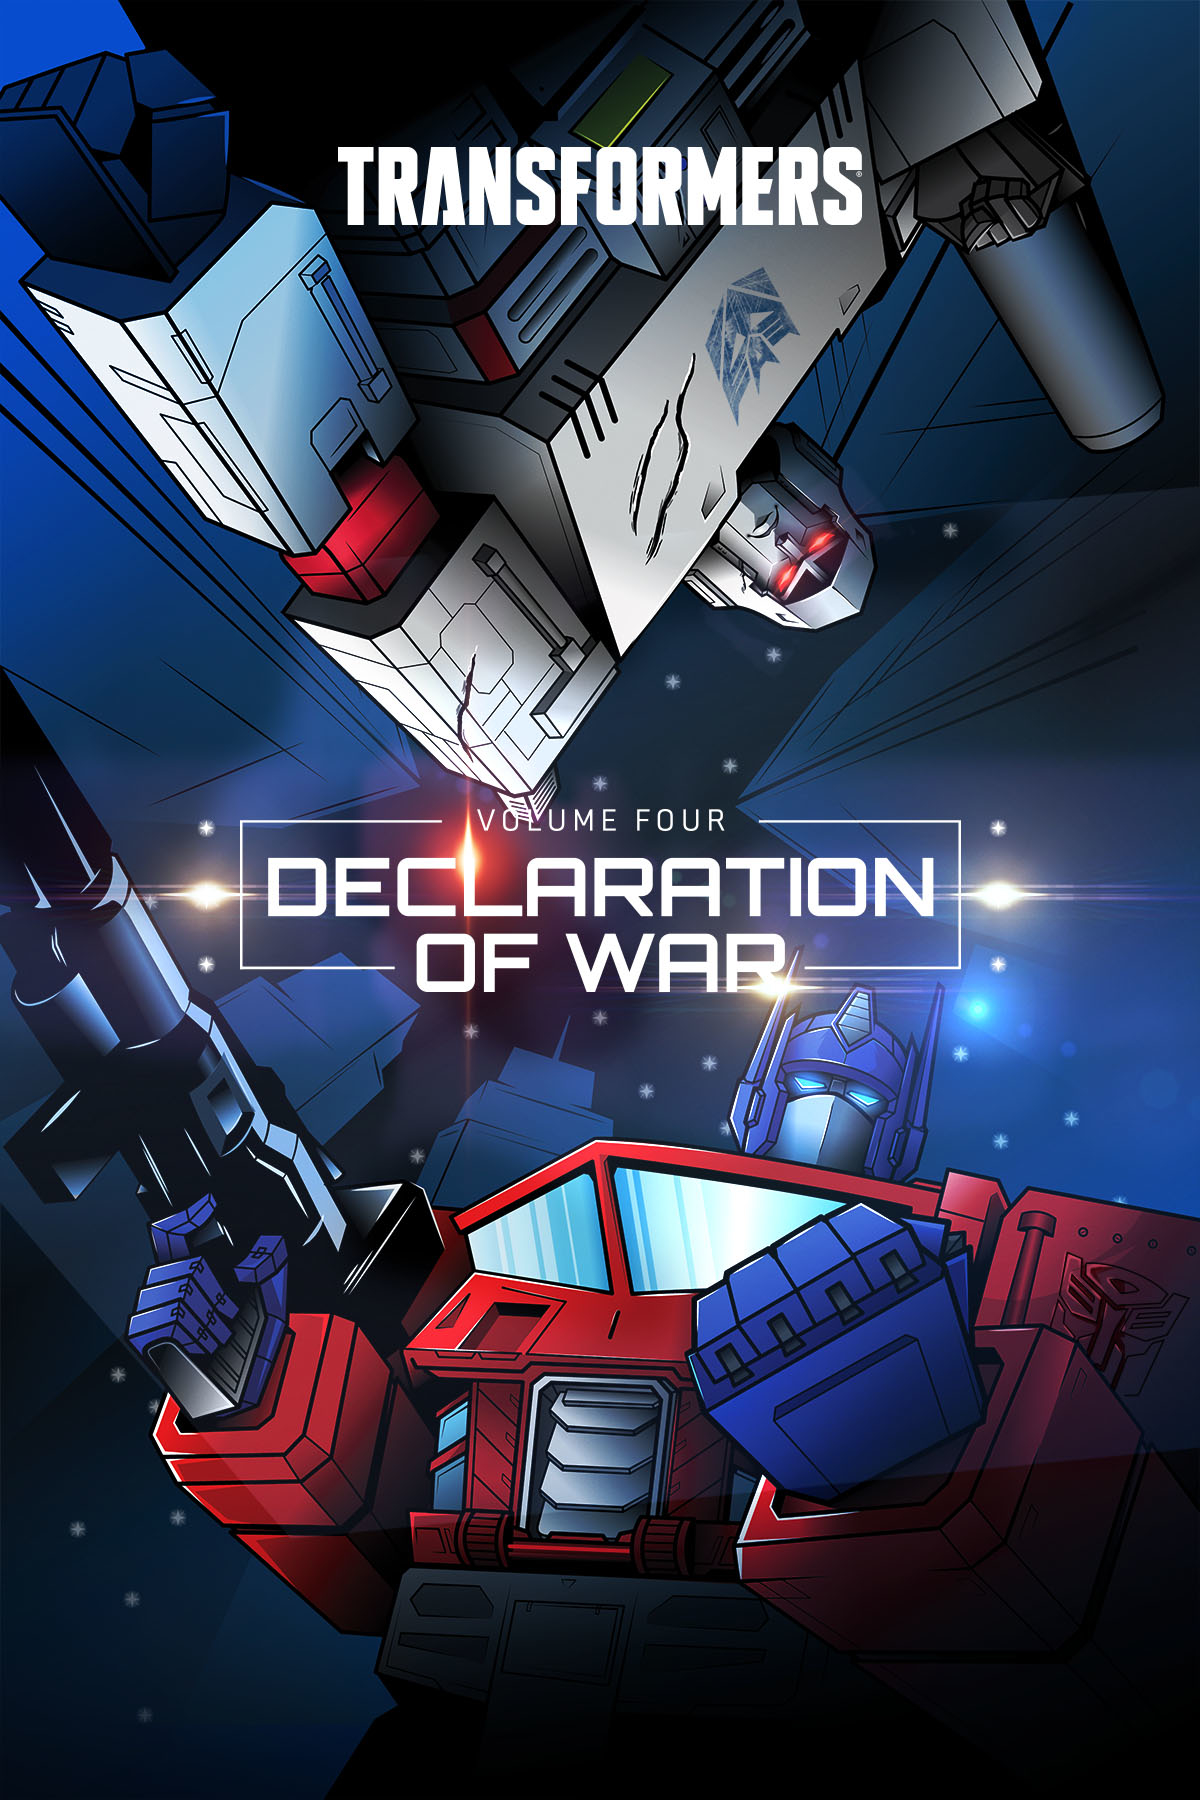 Transformers Hardcover Volume 4 Declaration of War